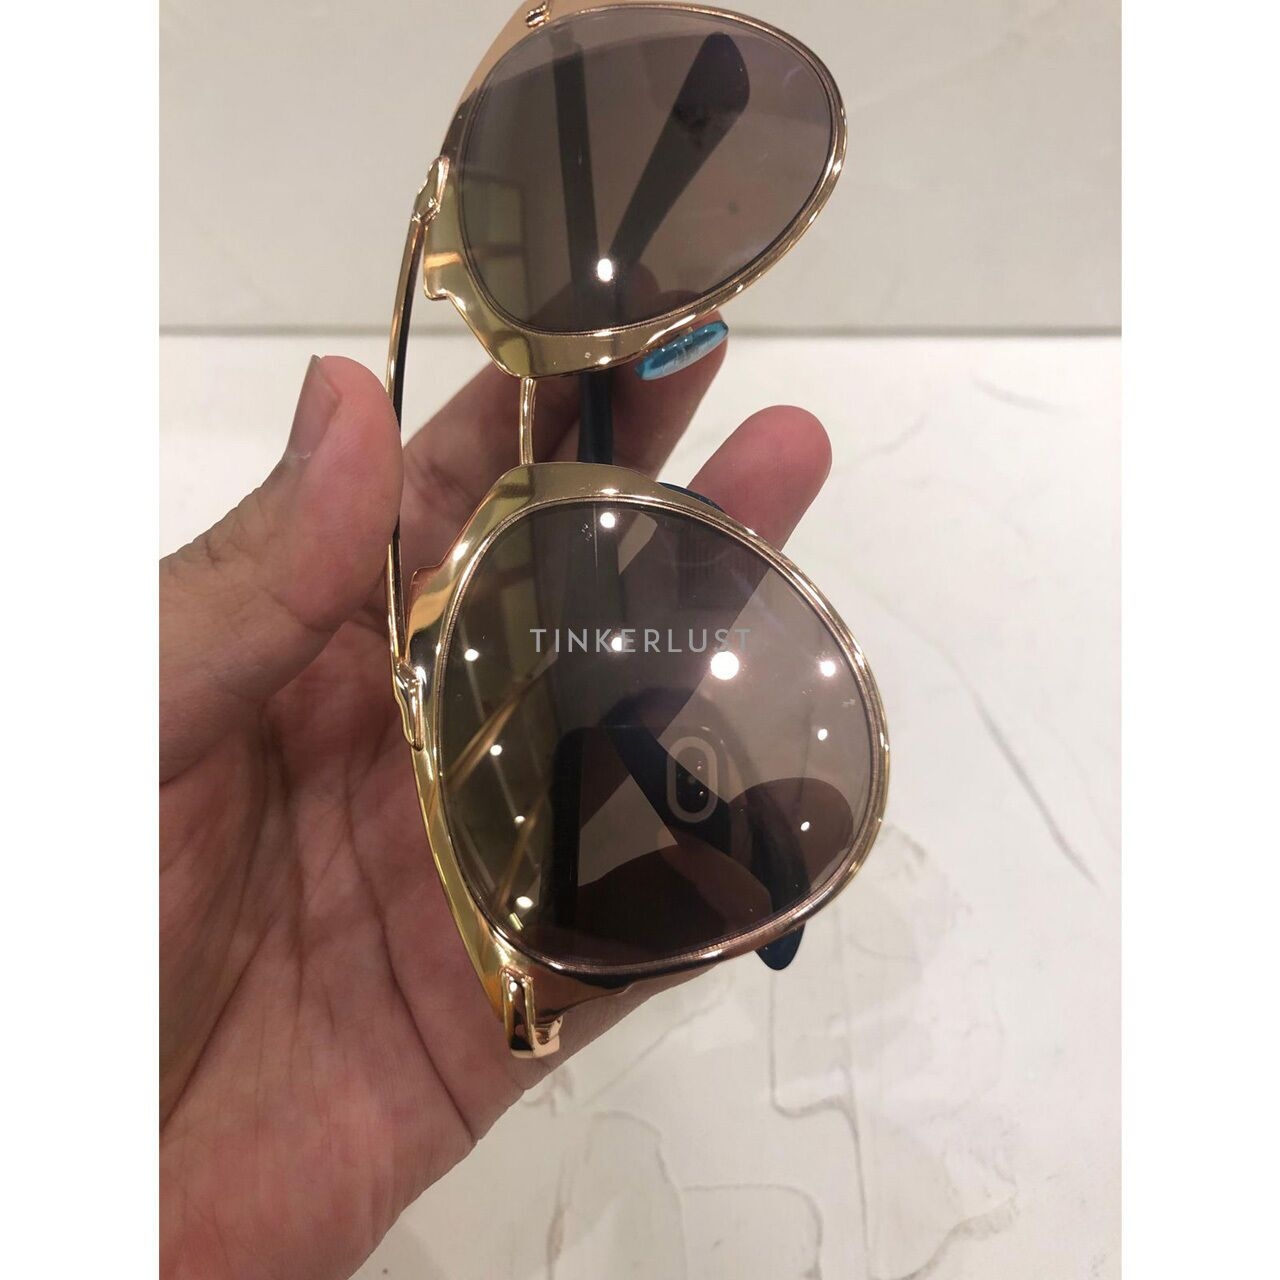 Christian Dior Rose Gold Reflective Sunglasses